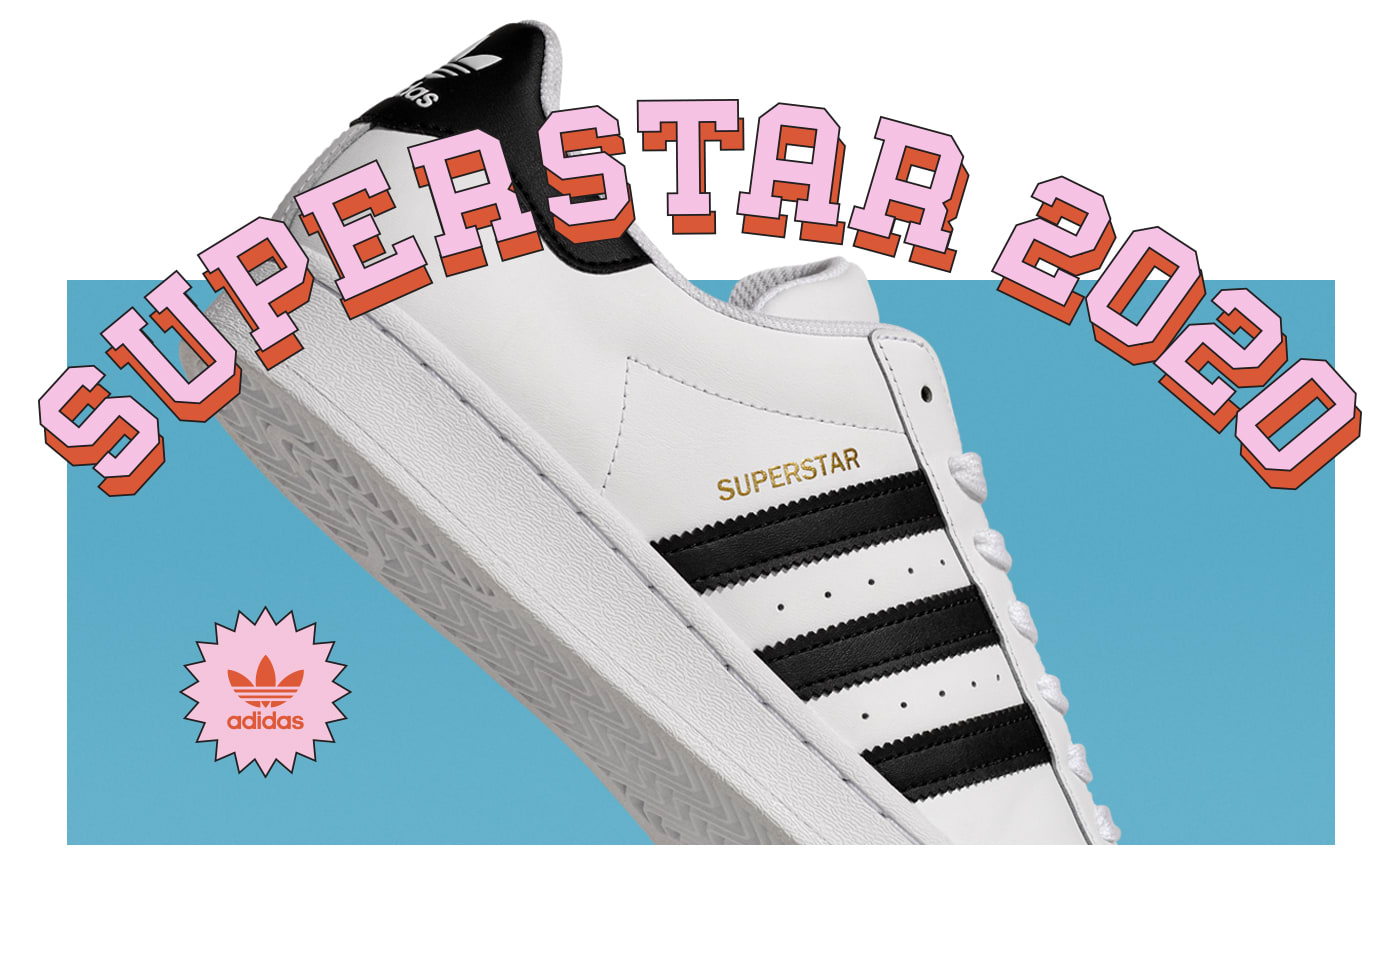 شايني شوب Superstar Shoes | adidas US شايني شوب